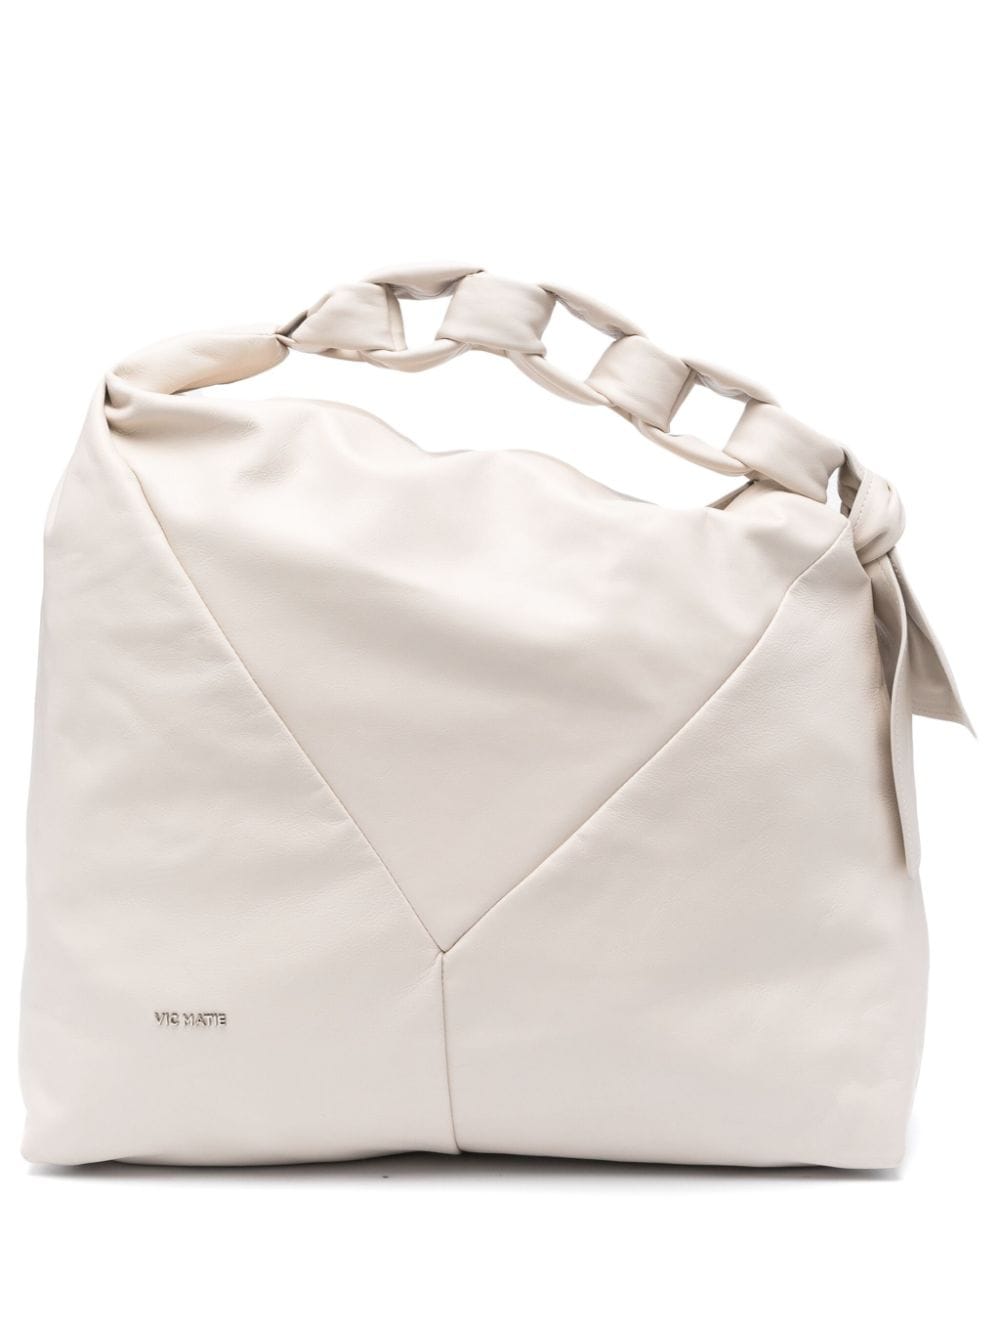 asymmetric leather tote bag